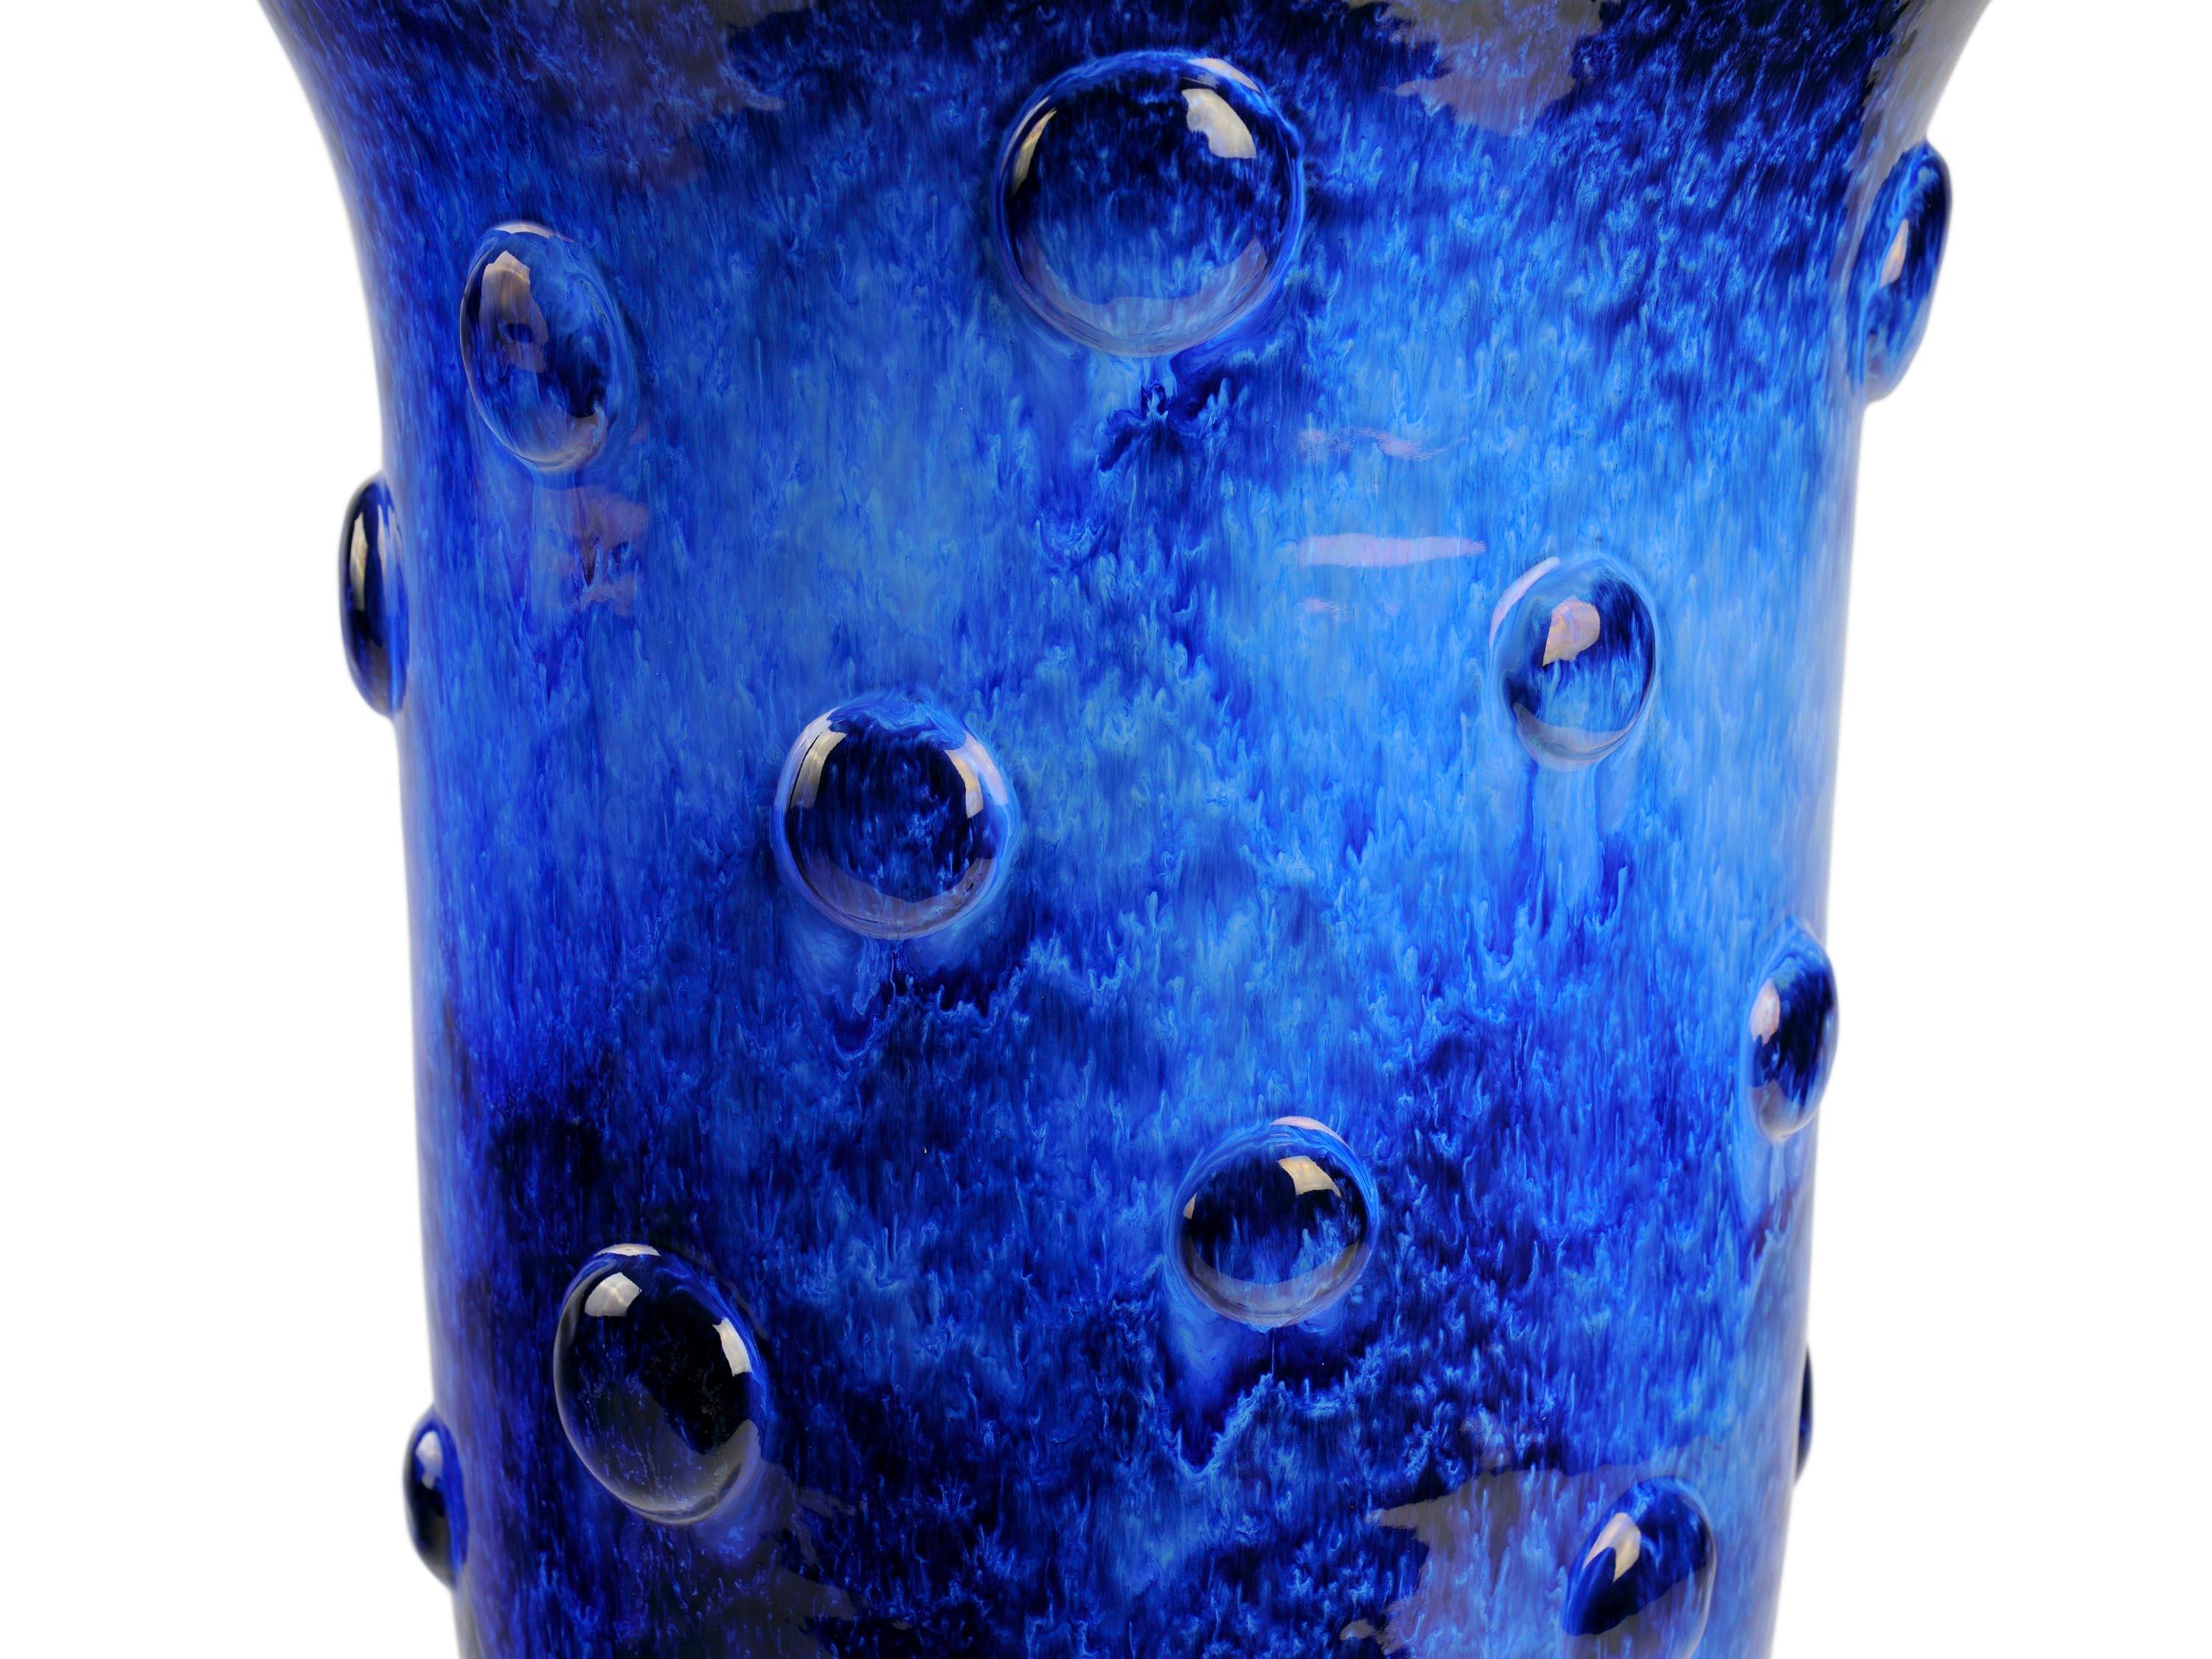 Cobalt Blue Majolica Vase Vessel Ceramic Centerpiece Sculpture Handmade, Italy In New Condition For Sale In Recanati, IT